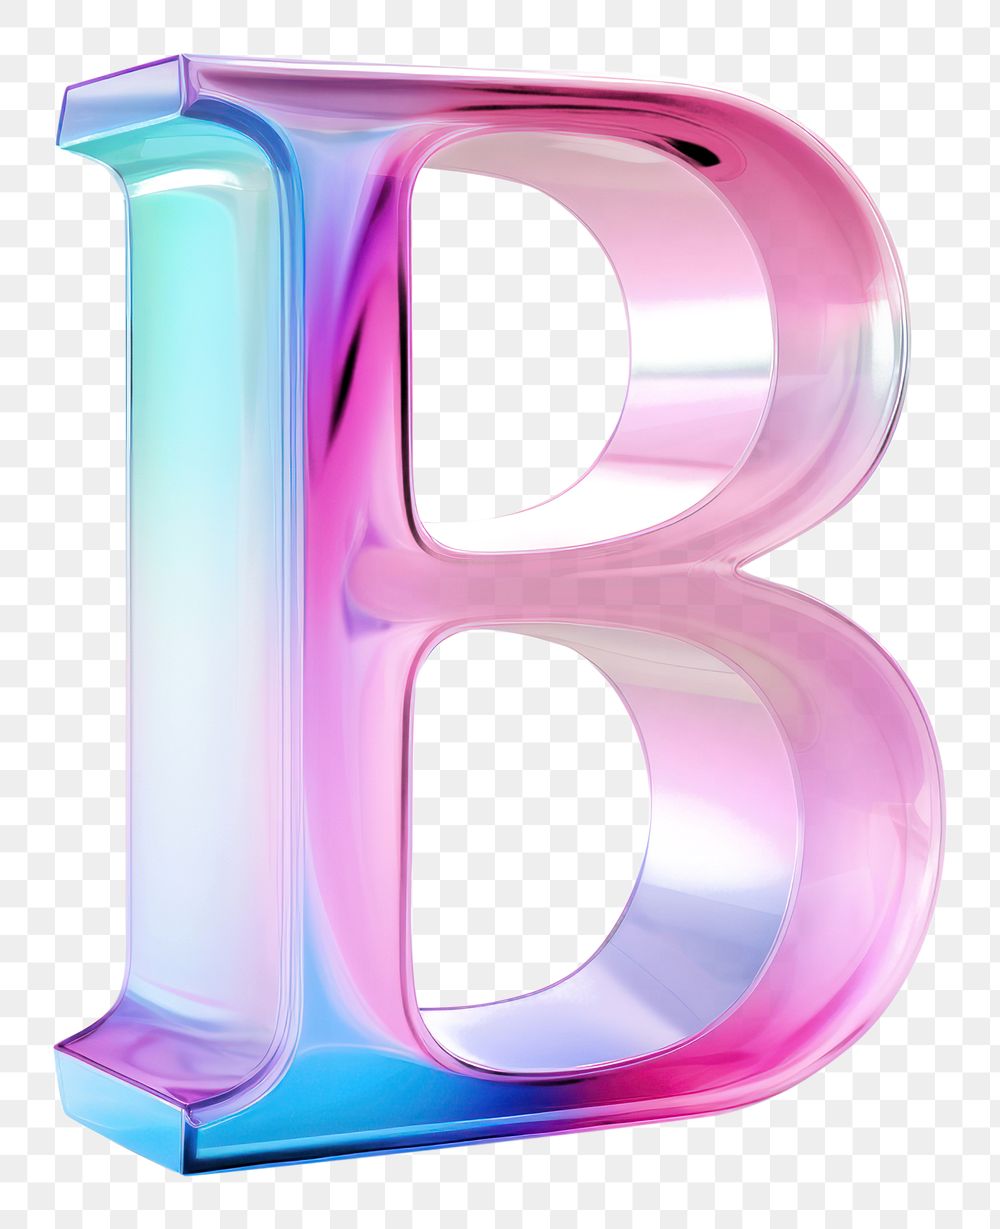 PNG Alphabet B number shape text. 